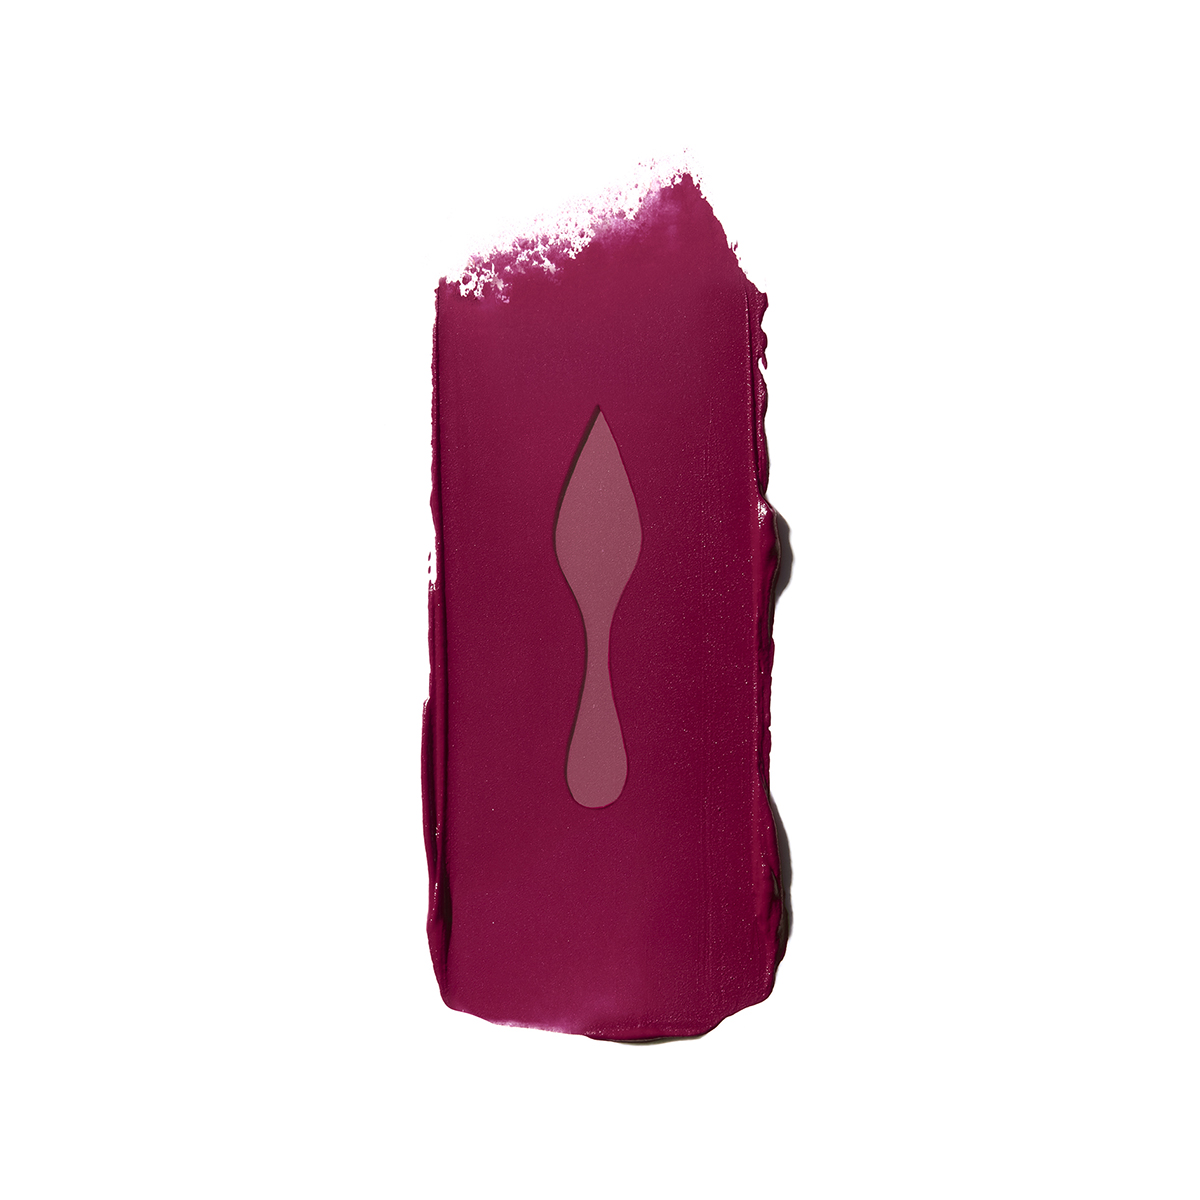 Christian Louboutin Matte Fluid Lip Colour-Rouge Louboutin (Makeup